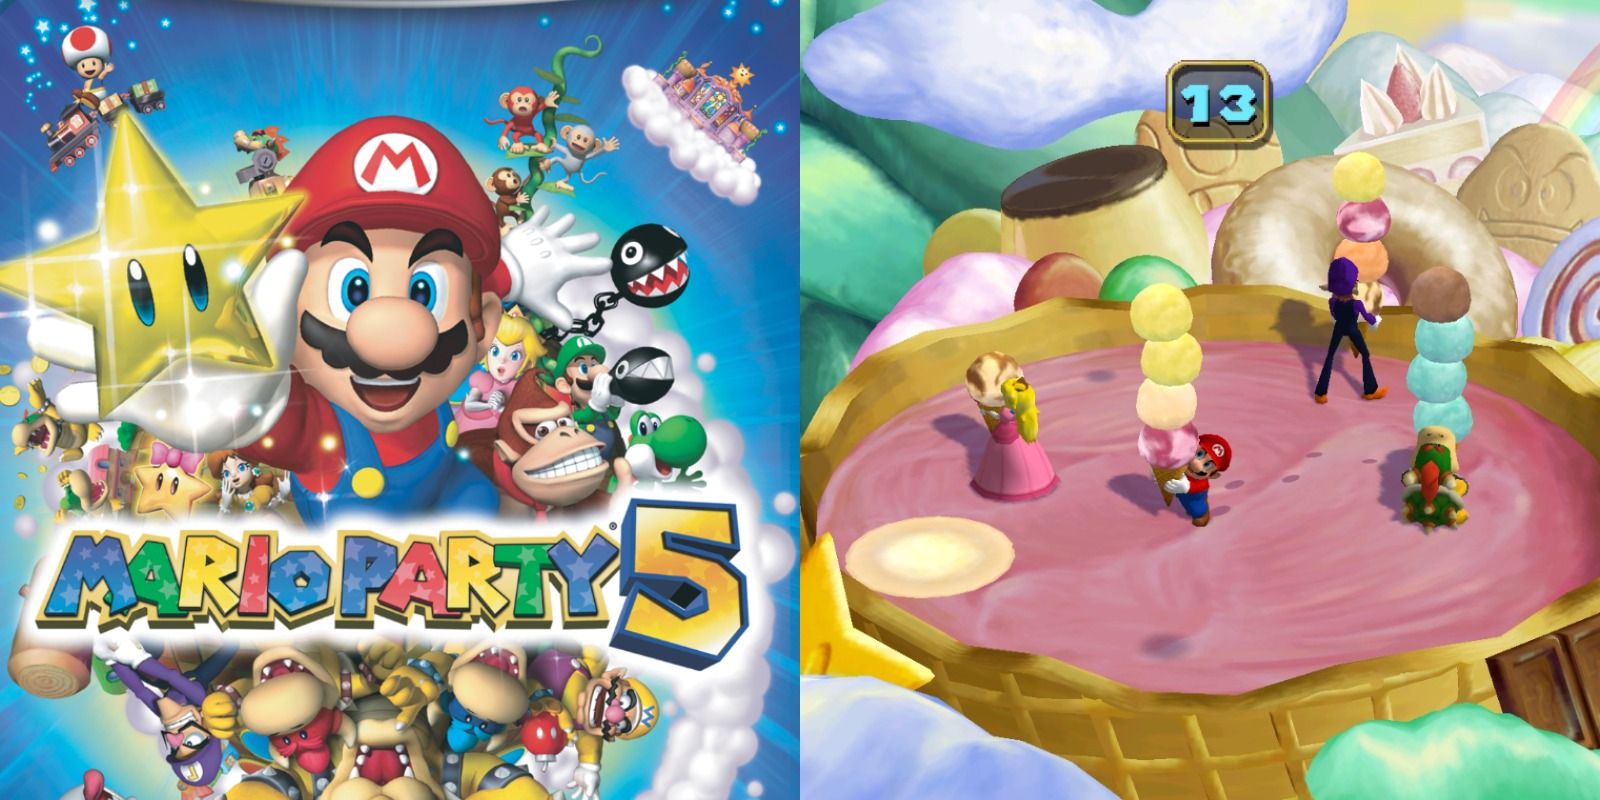 Mario Party 5 for the Nintendo GameCube